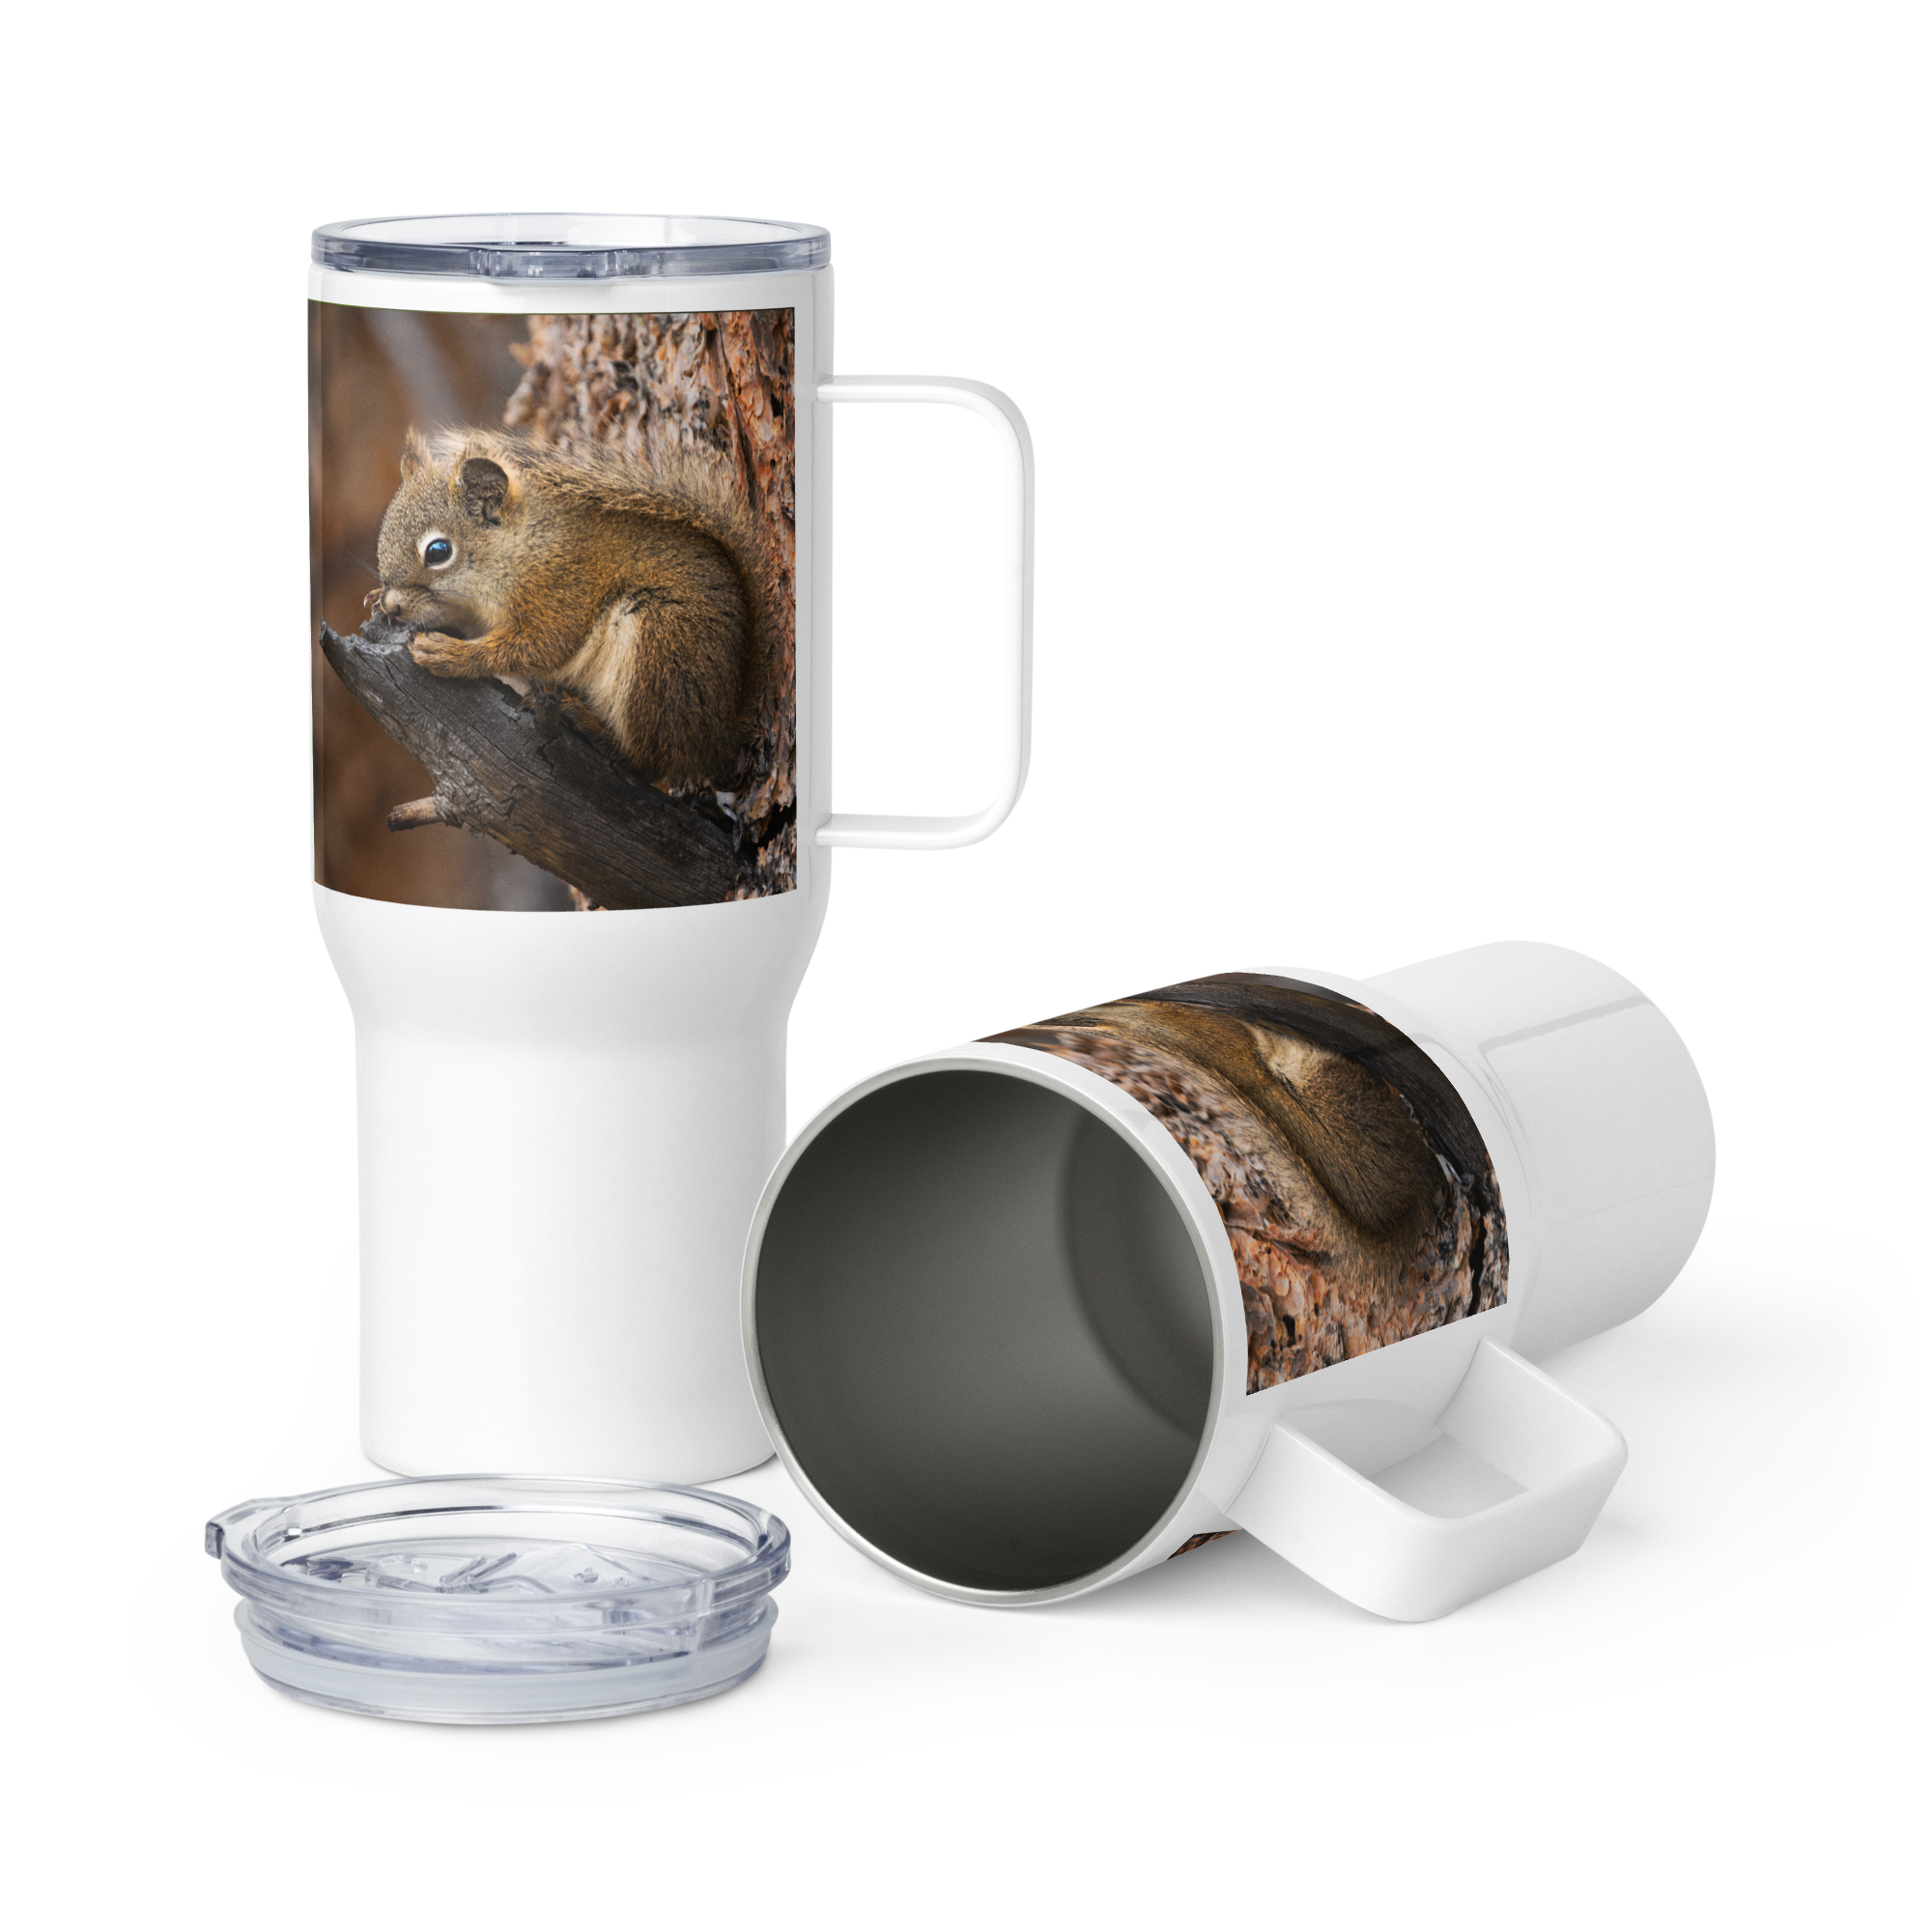 Squirrel Travel mug with a handle